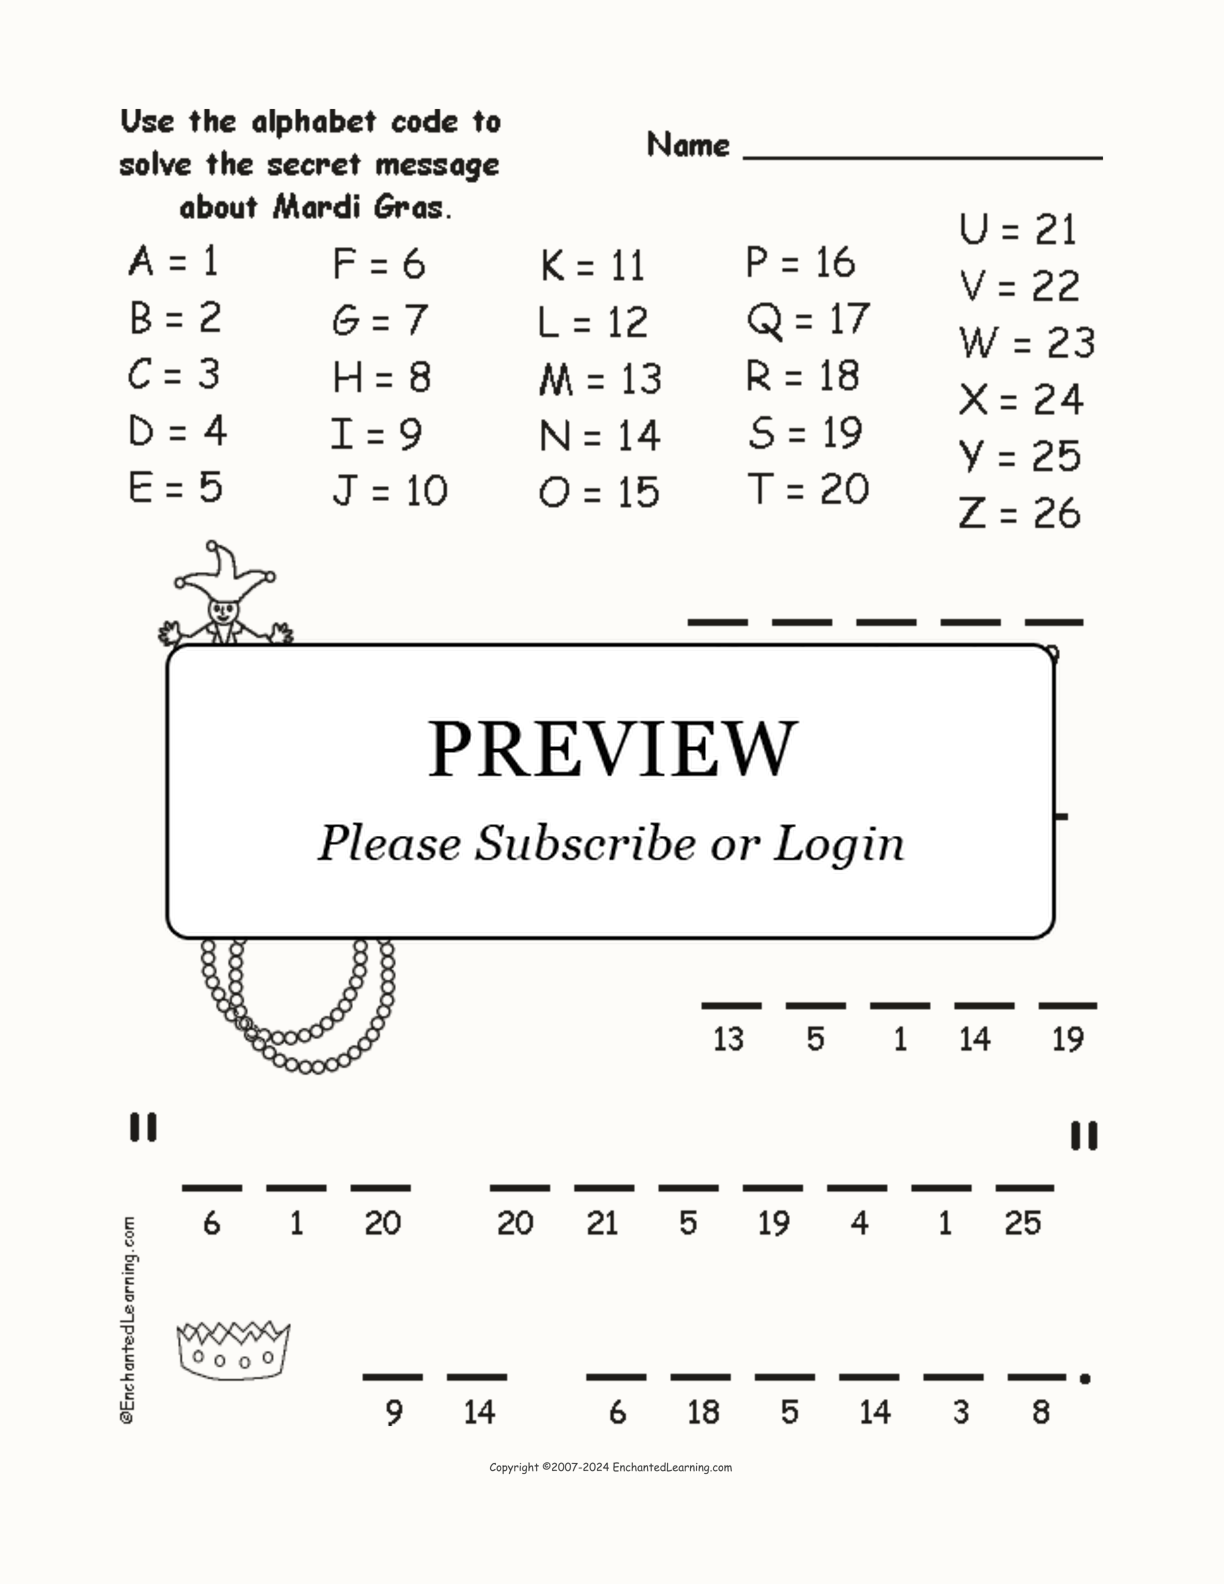 Mardi Gras Alphabet Code interactive worksheet page 1